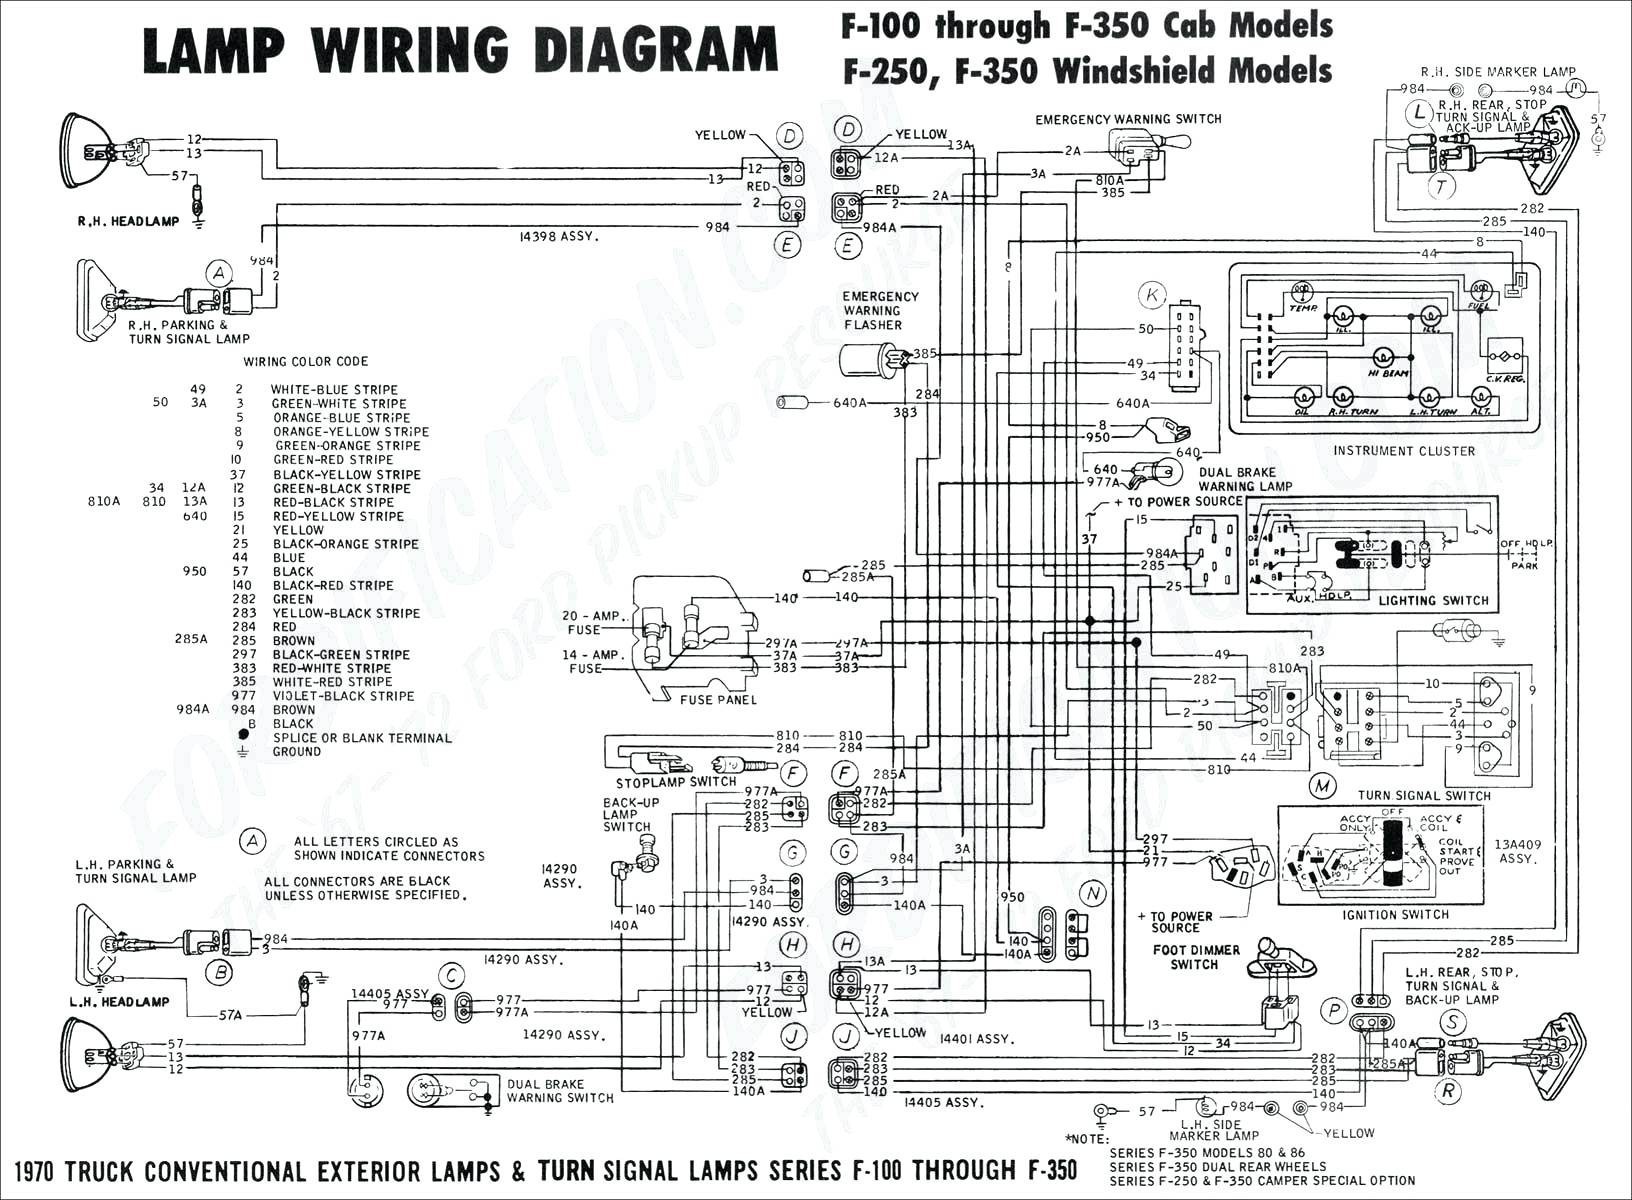 2005 F350 Tail Light Wiring Diagram 2000 ford F350 Tail Light Wiring Diagram Of 2005 F350 Tail Light Wiring Diagram